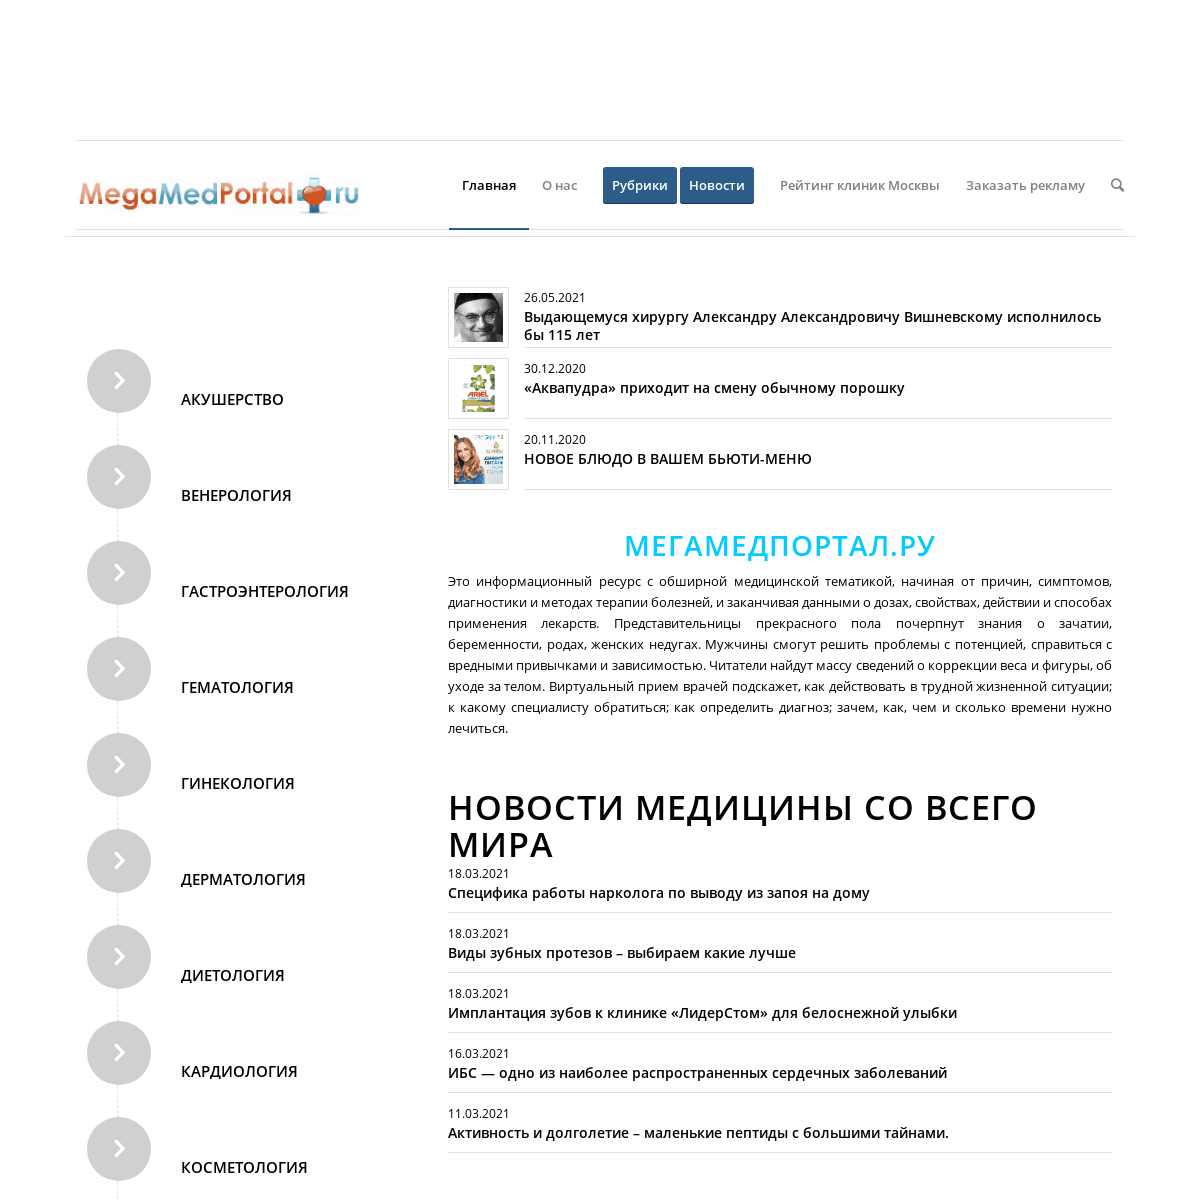 A complete backup of https://megamedportal.ru